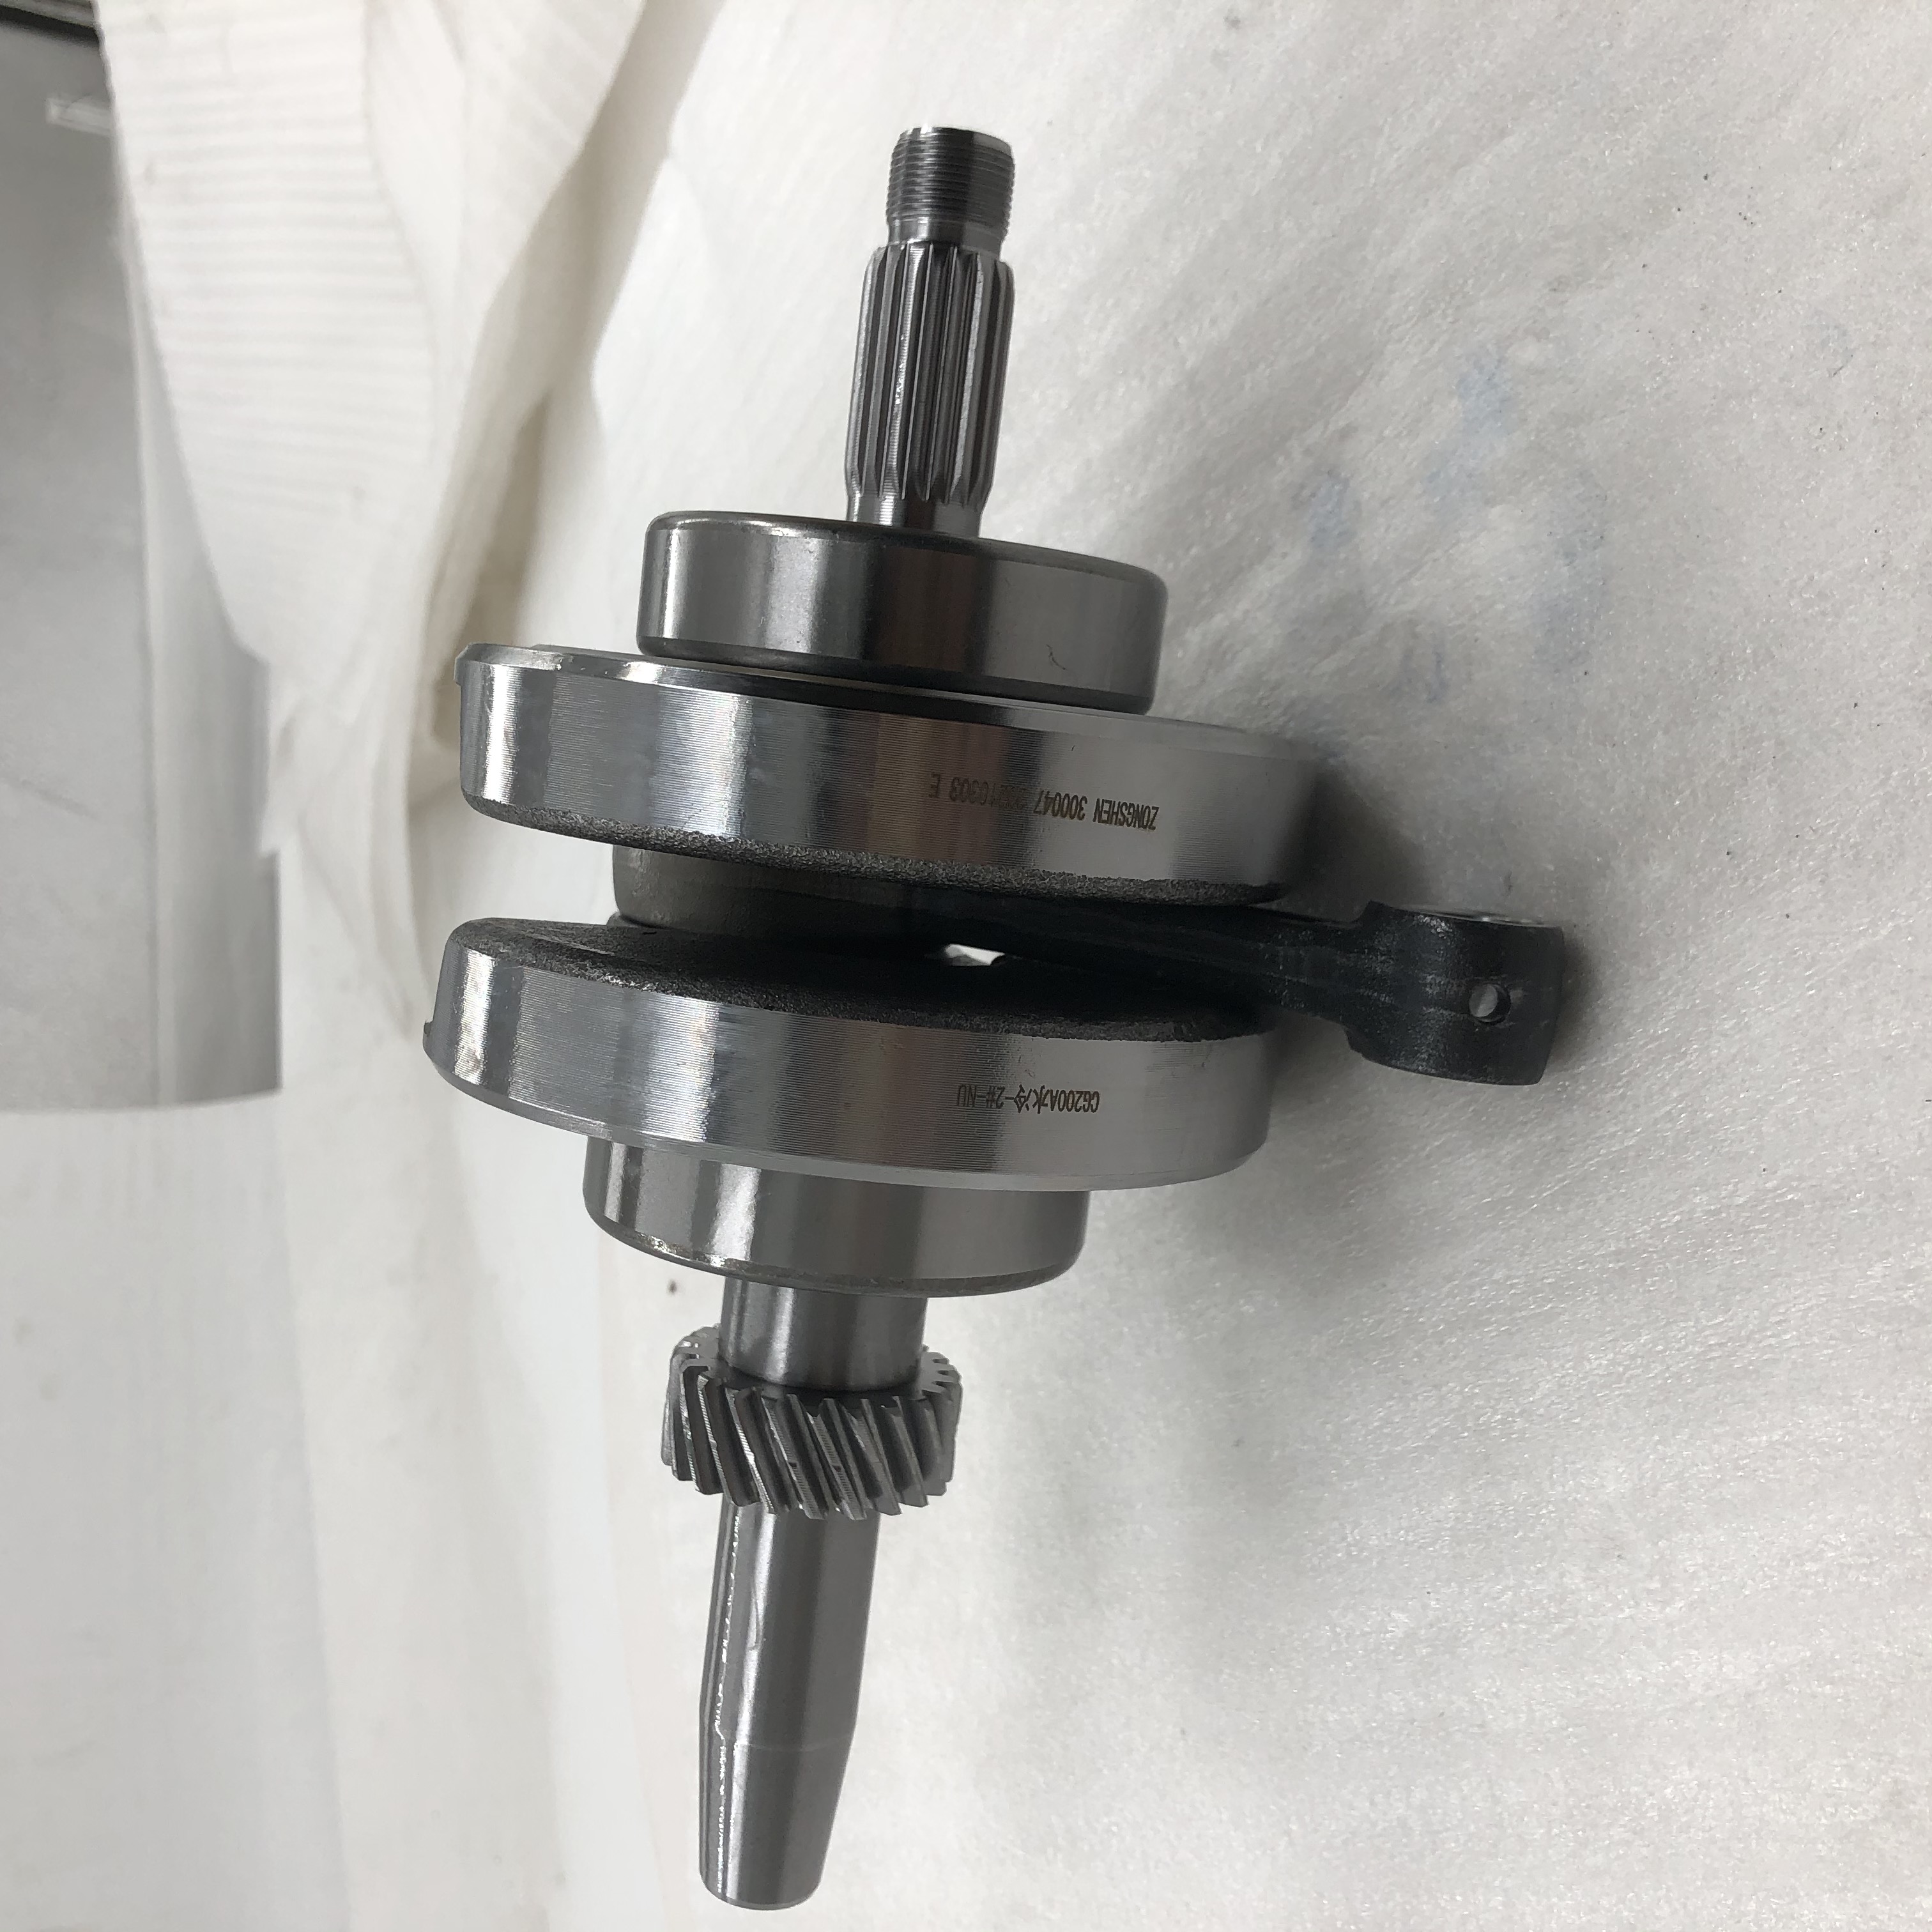 DAYANG Original parts Zongshen water-cooled crankshaft connecting rod parts bearings KU324118